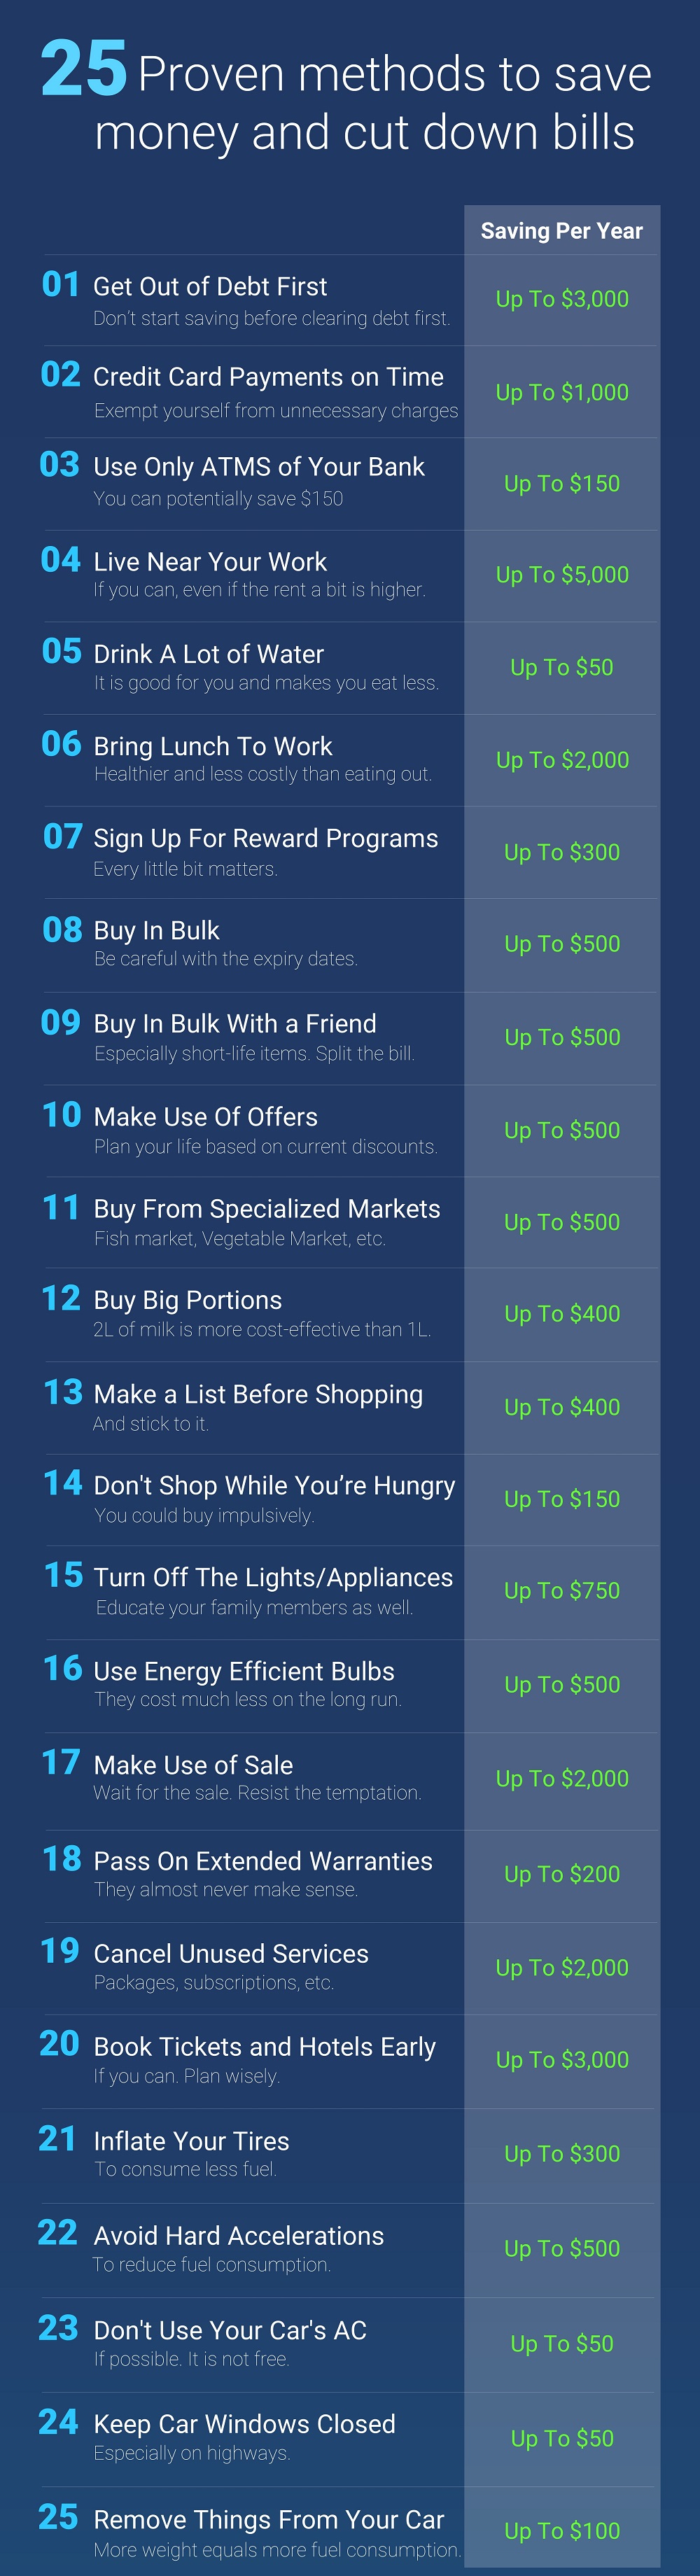 25 Simple Ways to Save Money